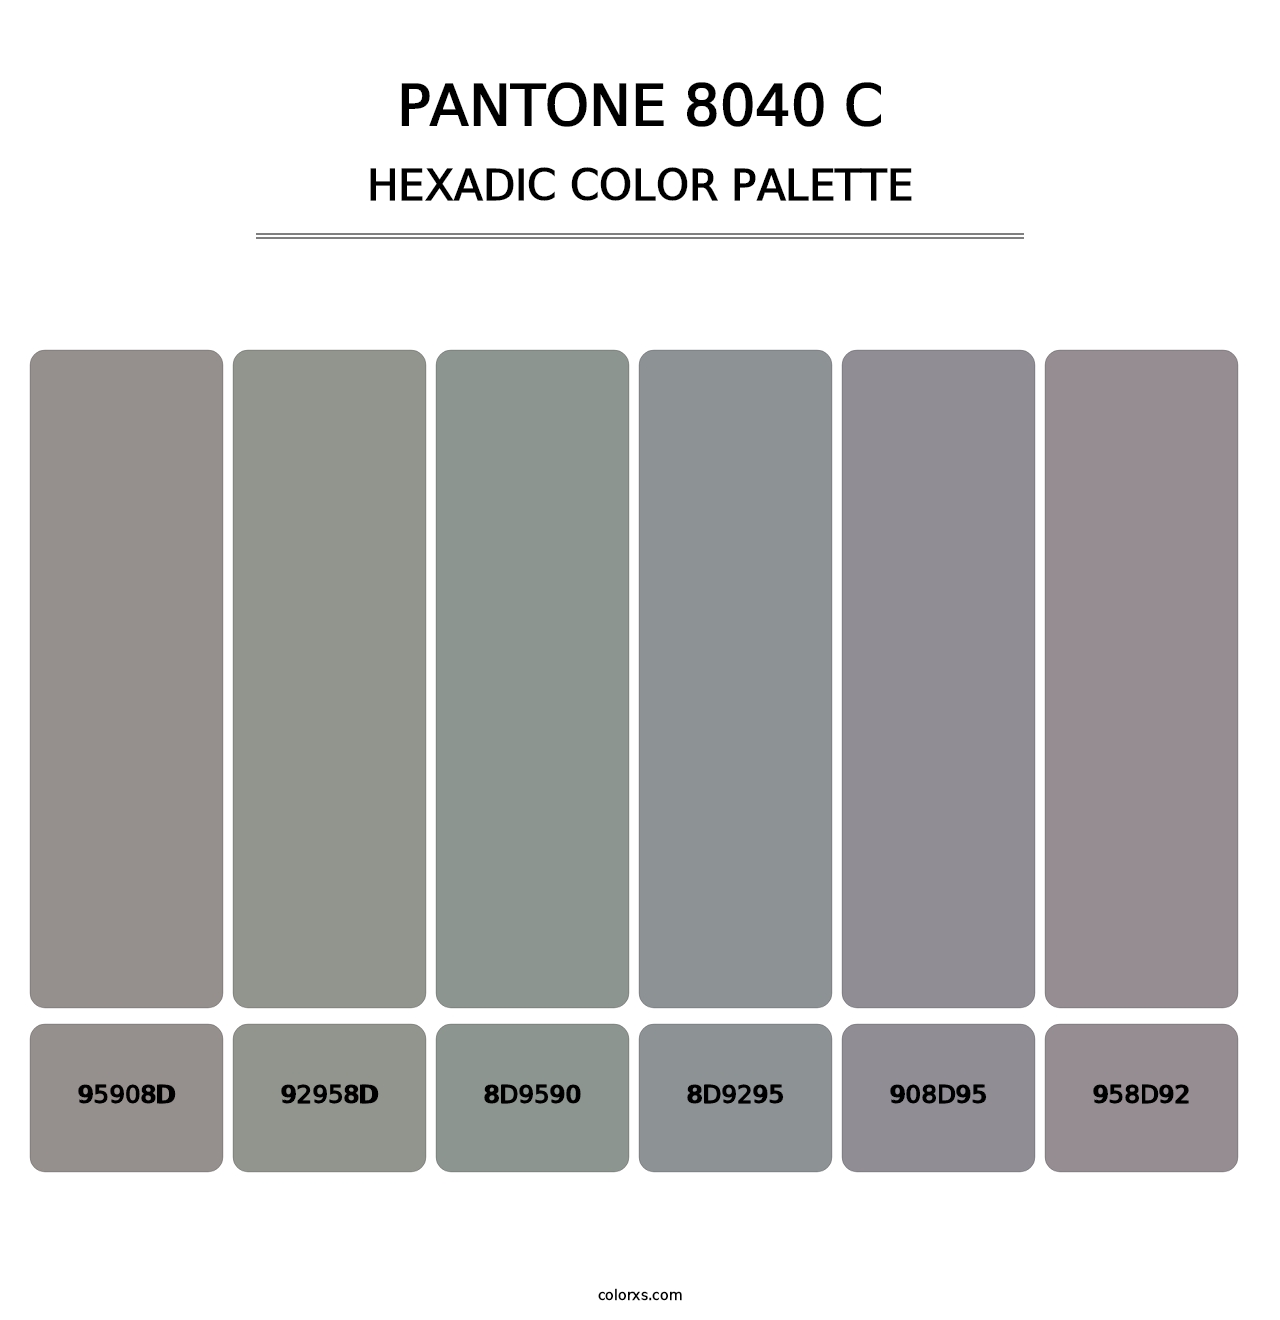 PANTONE 8040 C - Hexadic Color Palette